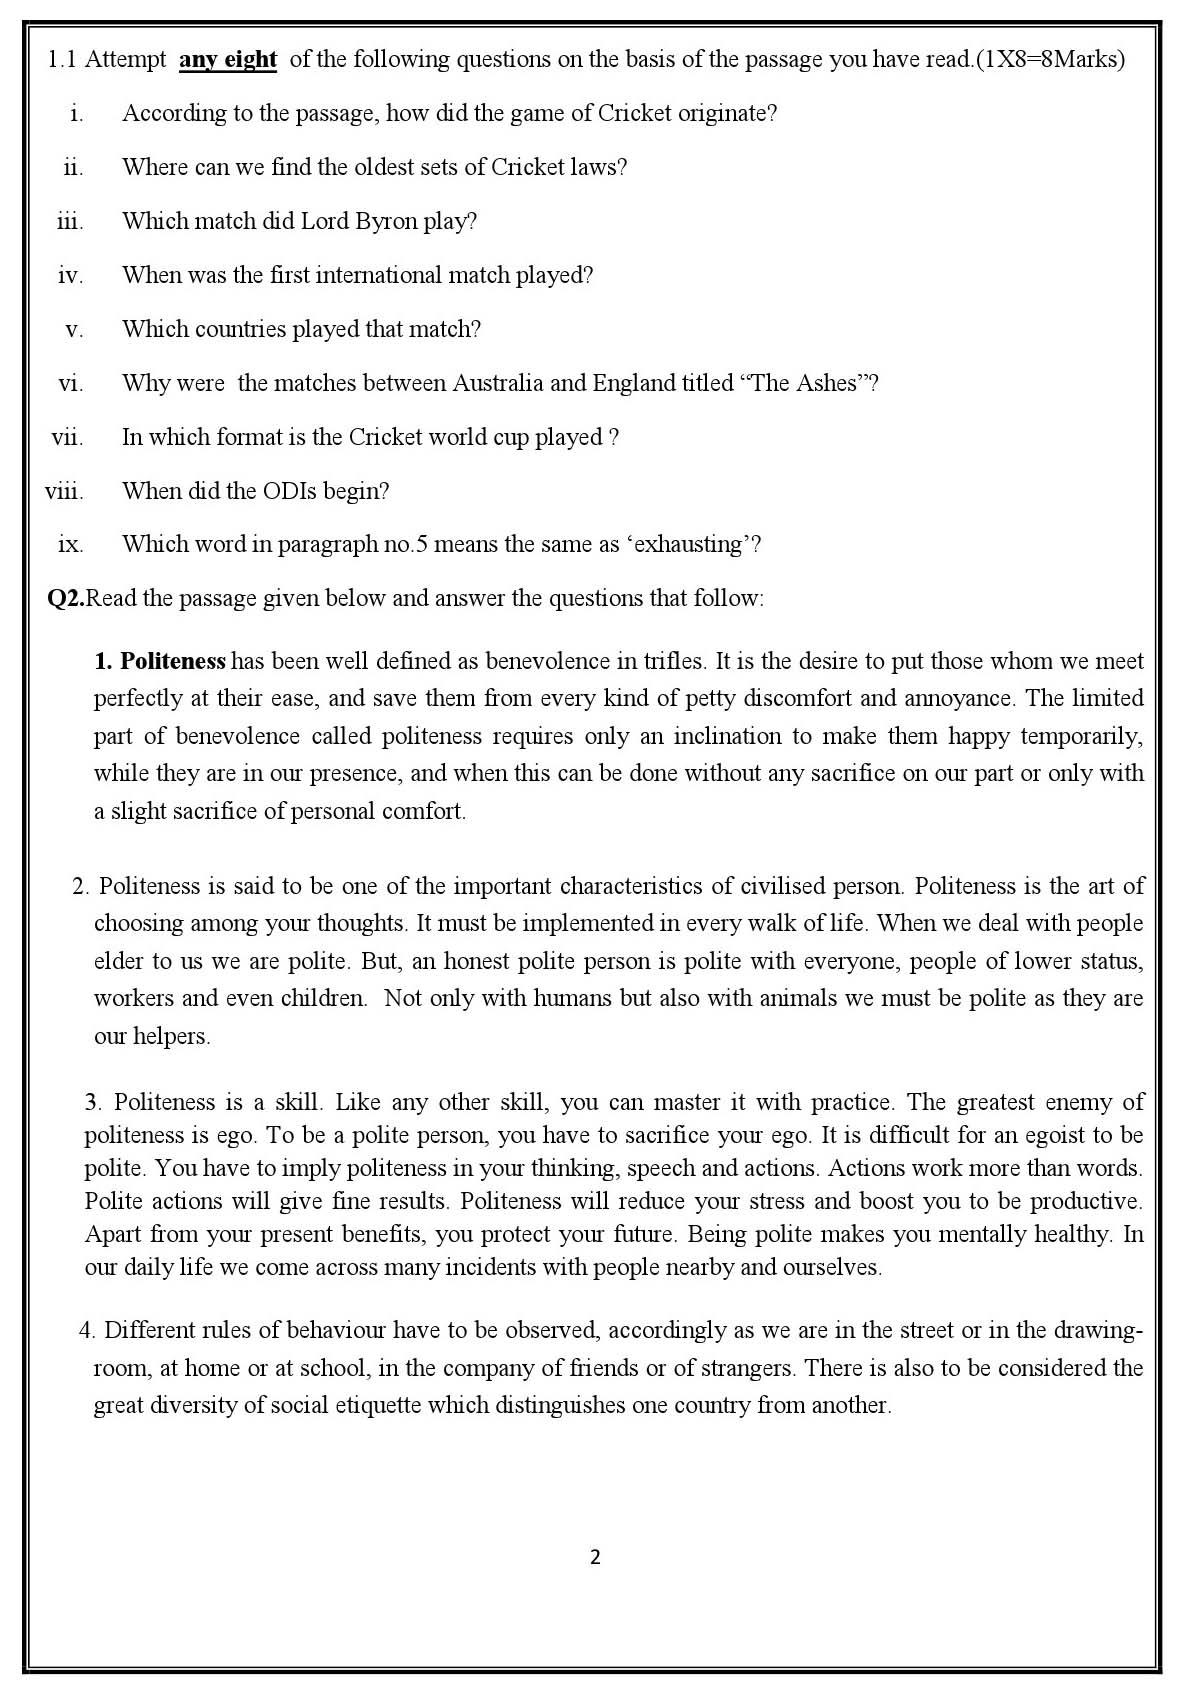 English Communicative CBSE Class X Sample Question Paper 2017 18 - Image 2